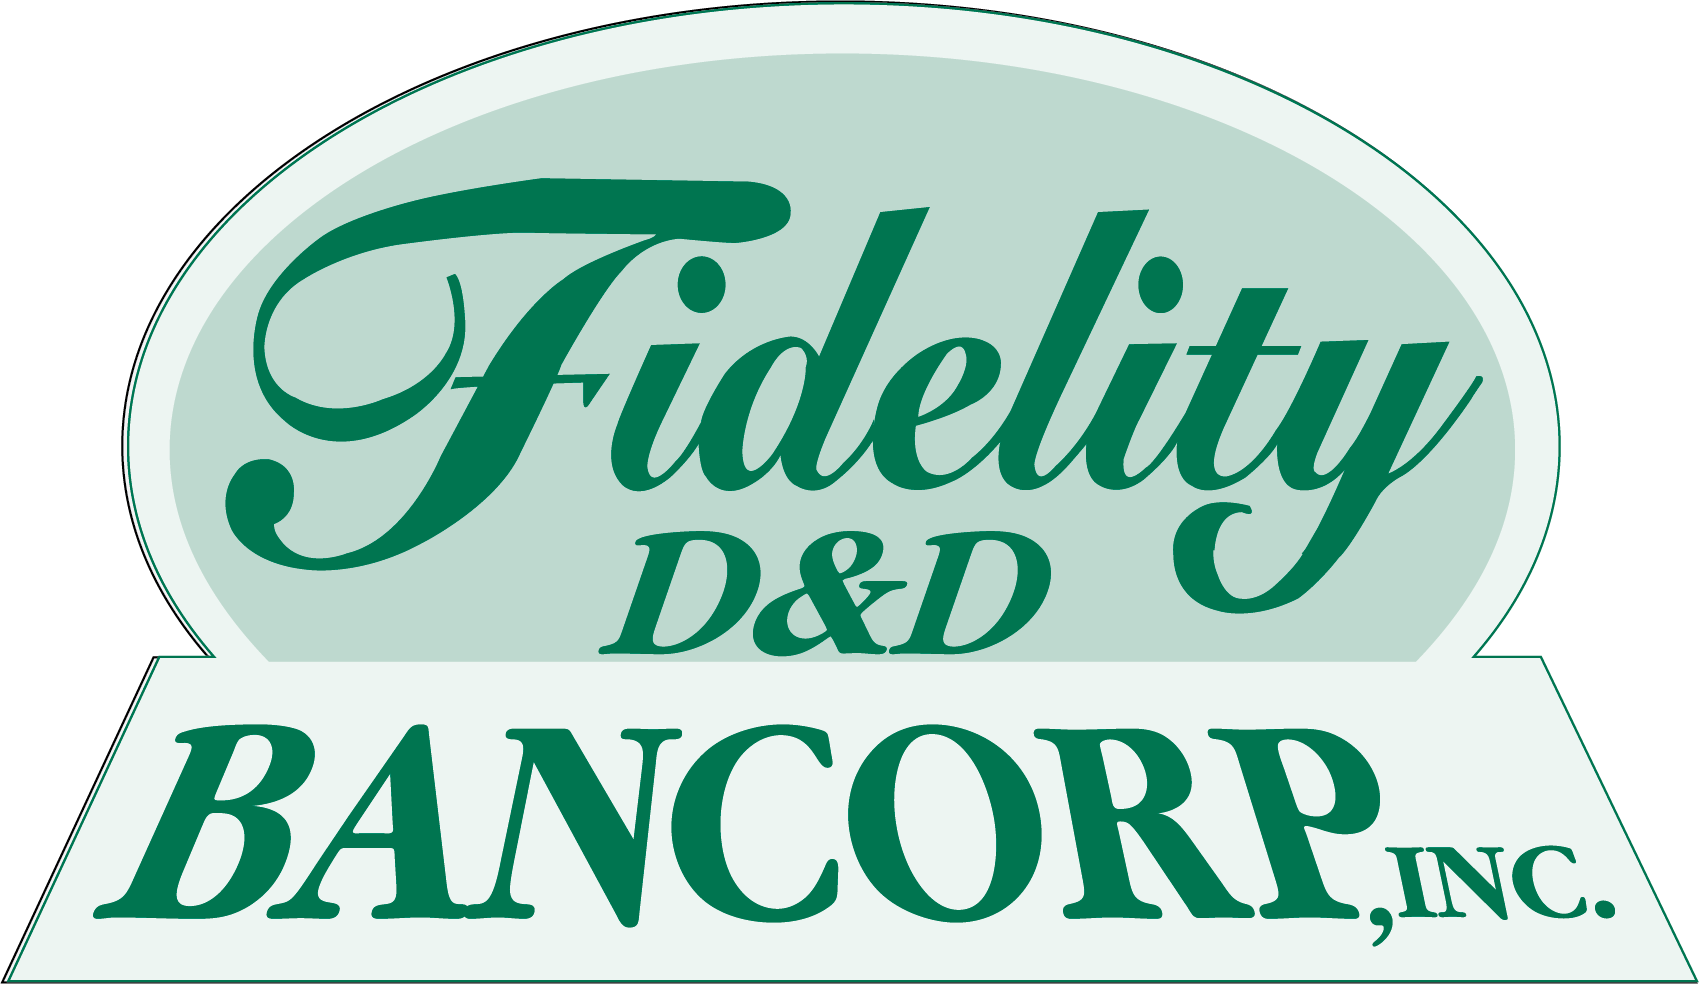 Fidelity D & D Bancorp, Inc. Logo